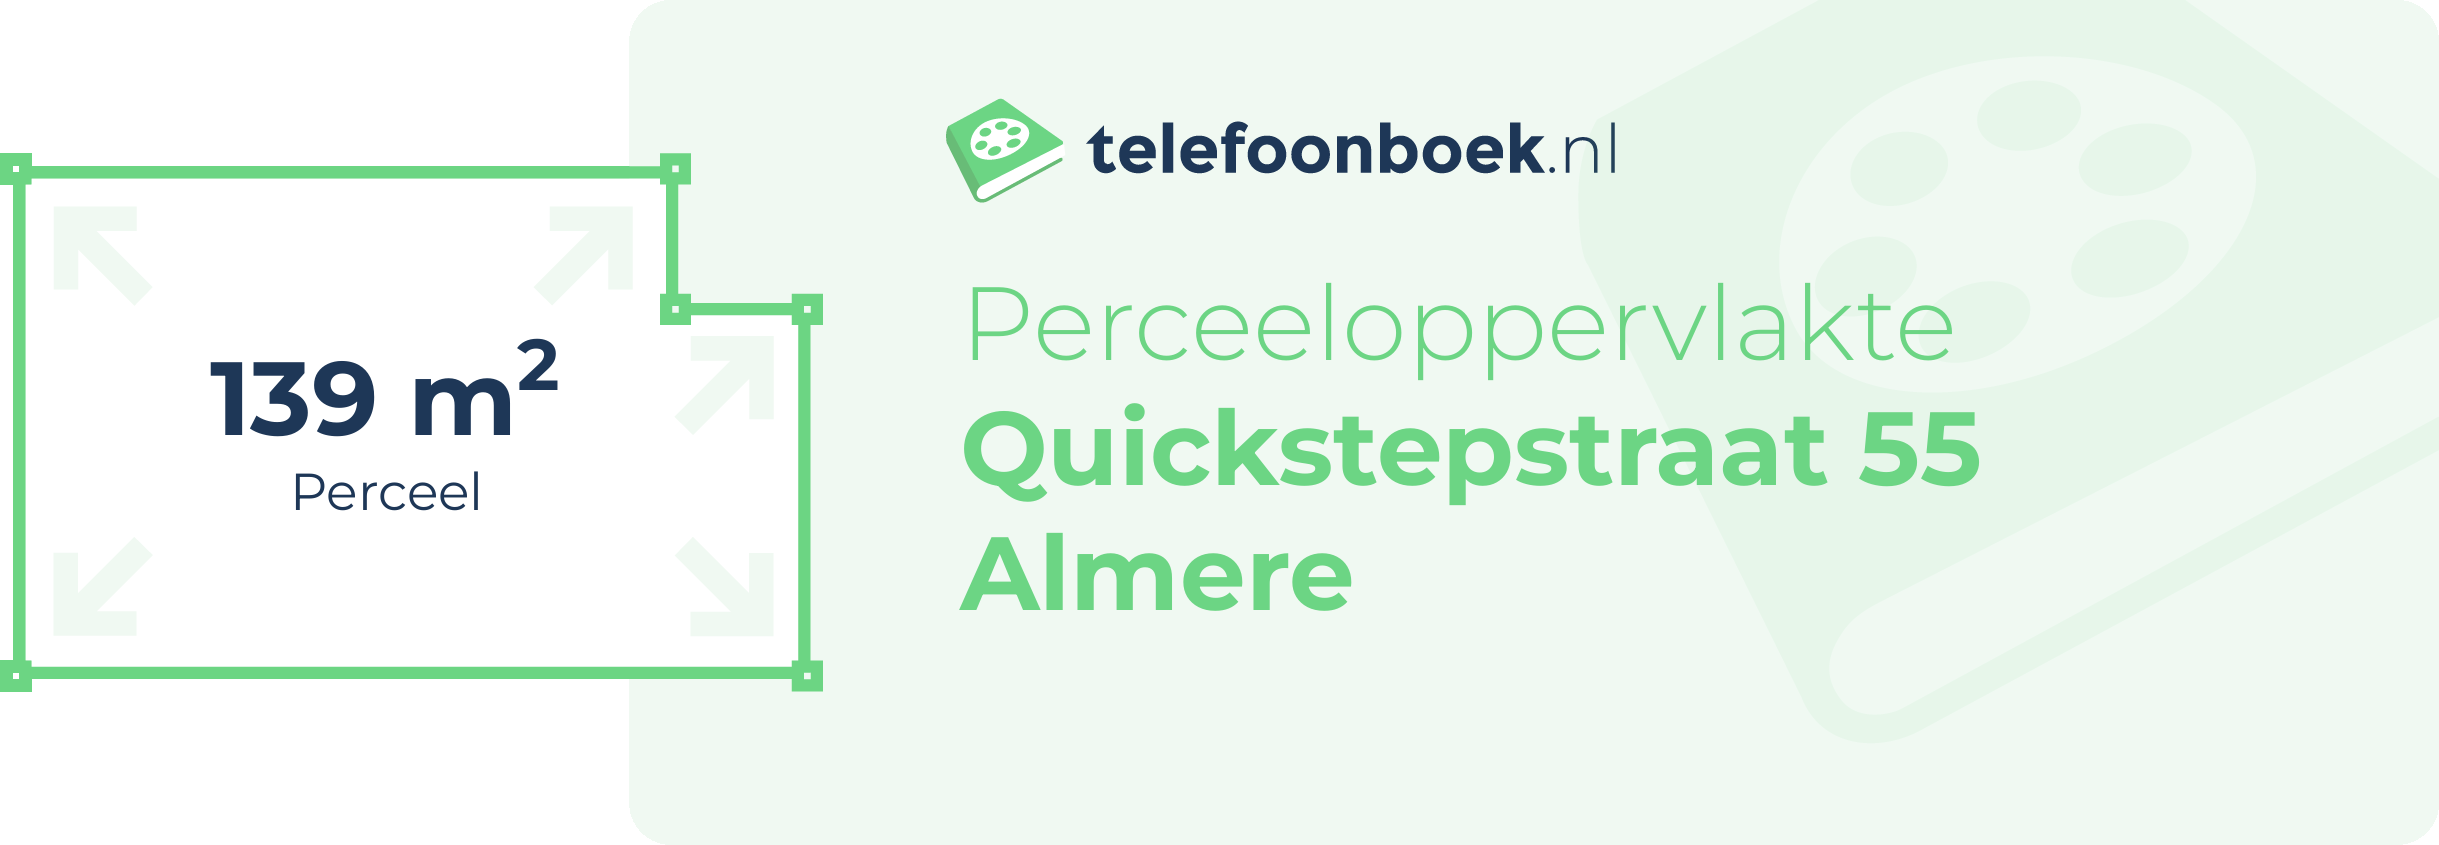 Perceeloppervlakte Quickstepstraat 55 Almere